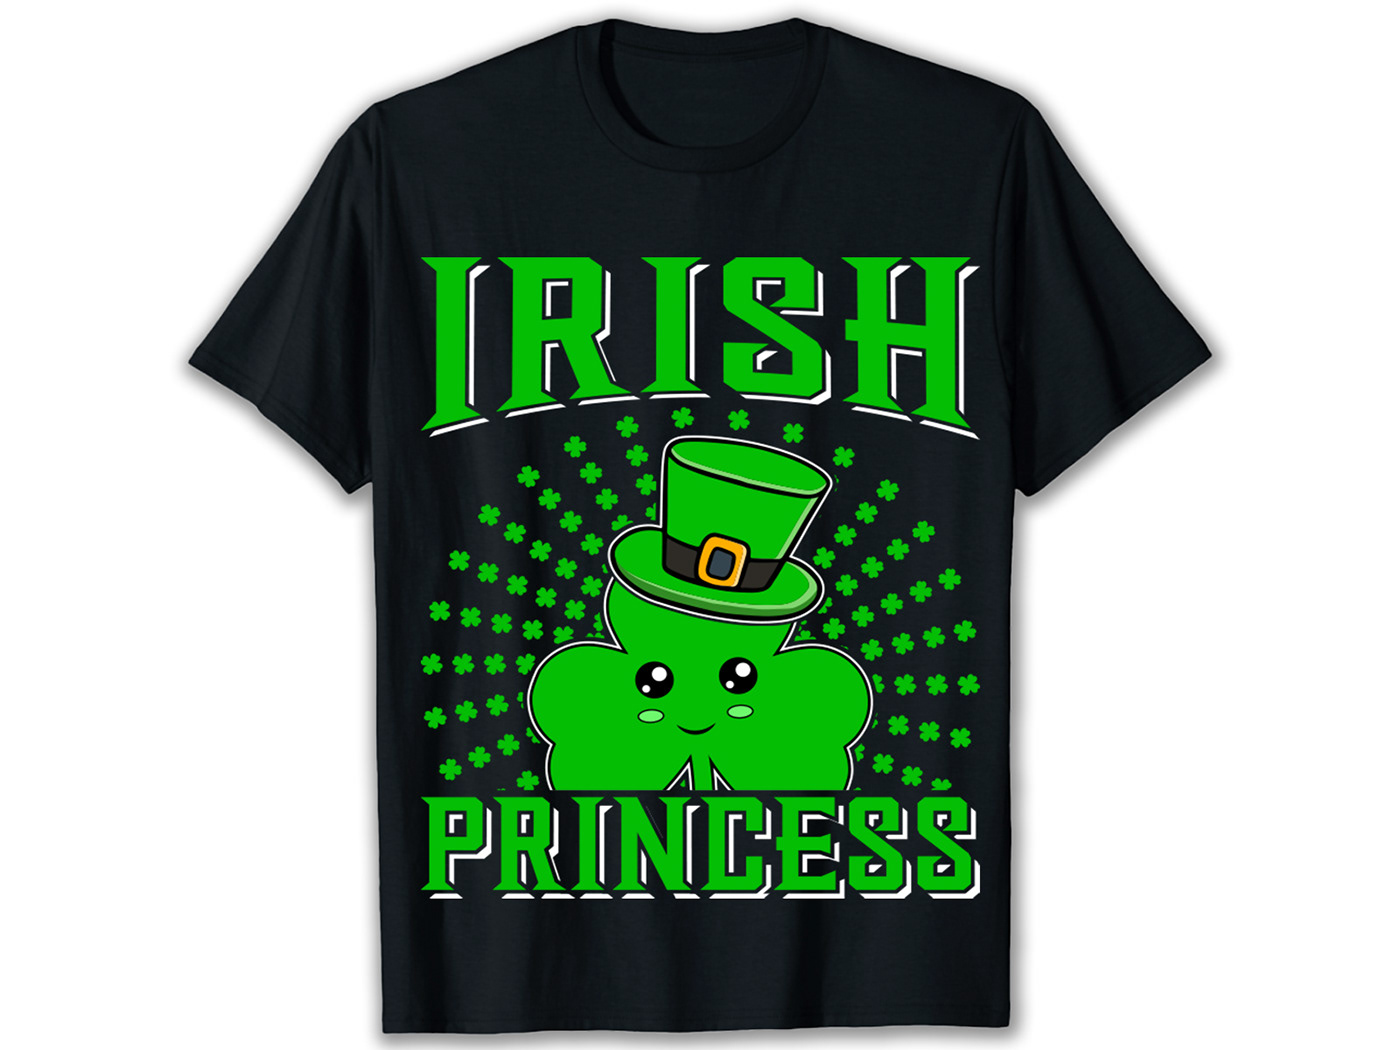 St. Patrick's Day T-shirt Design